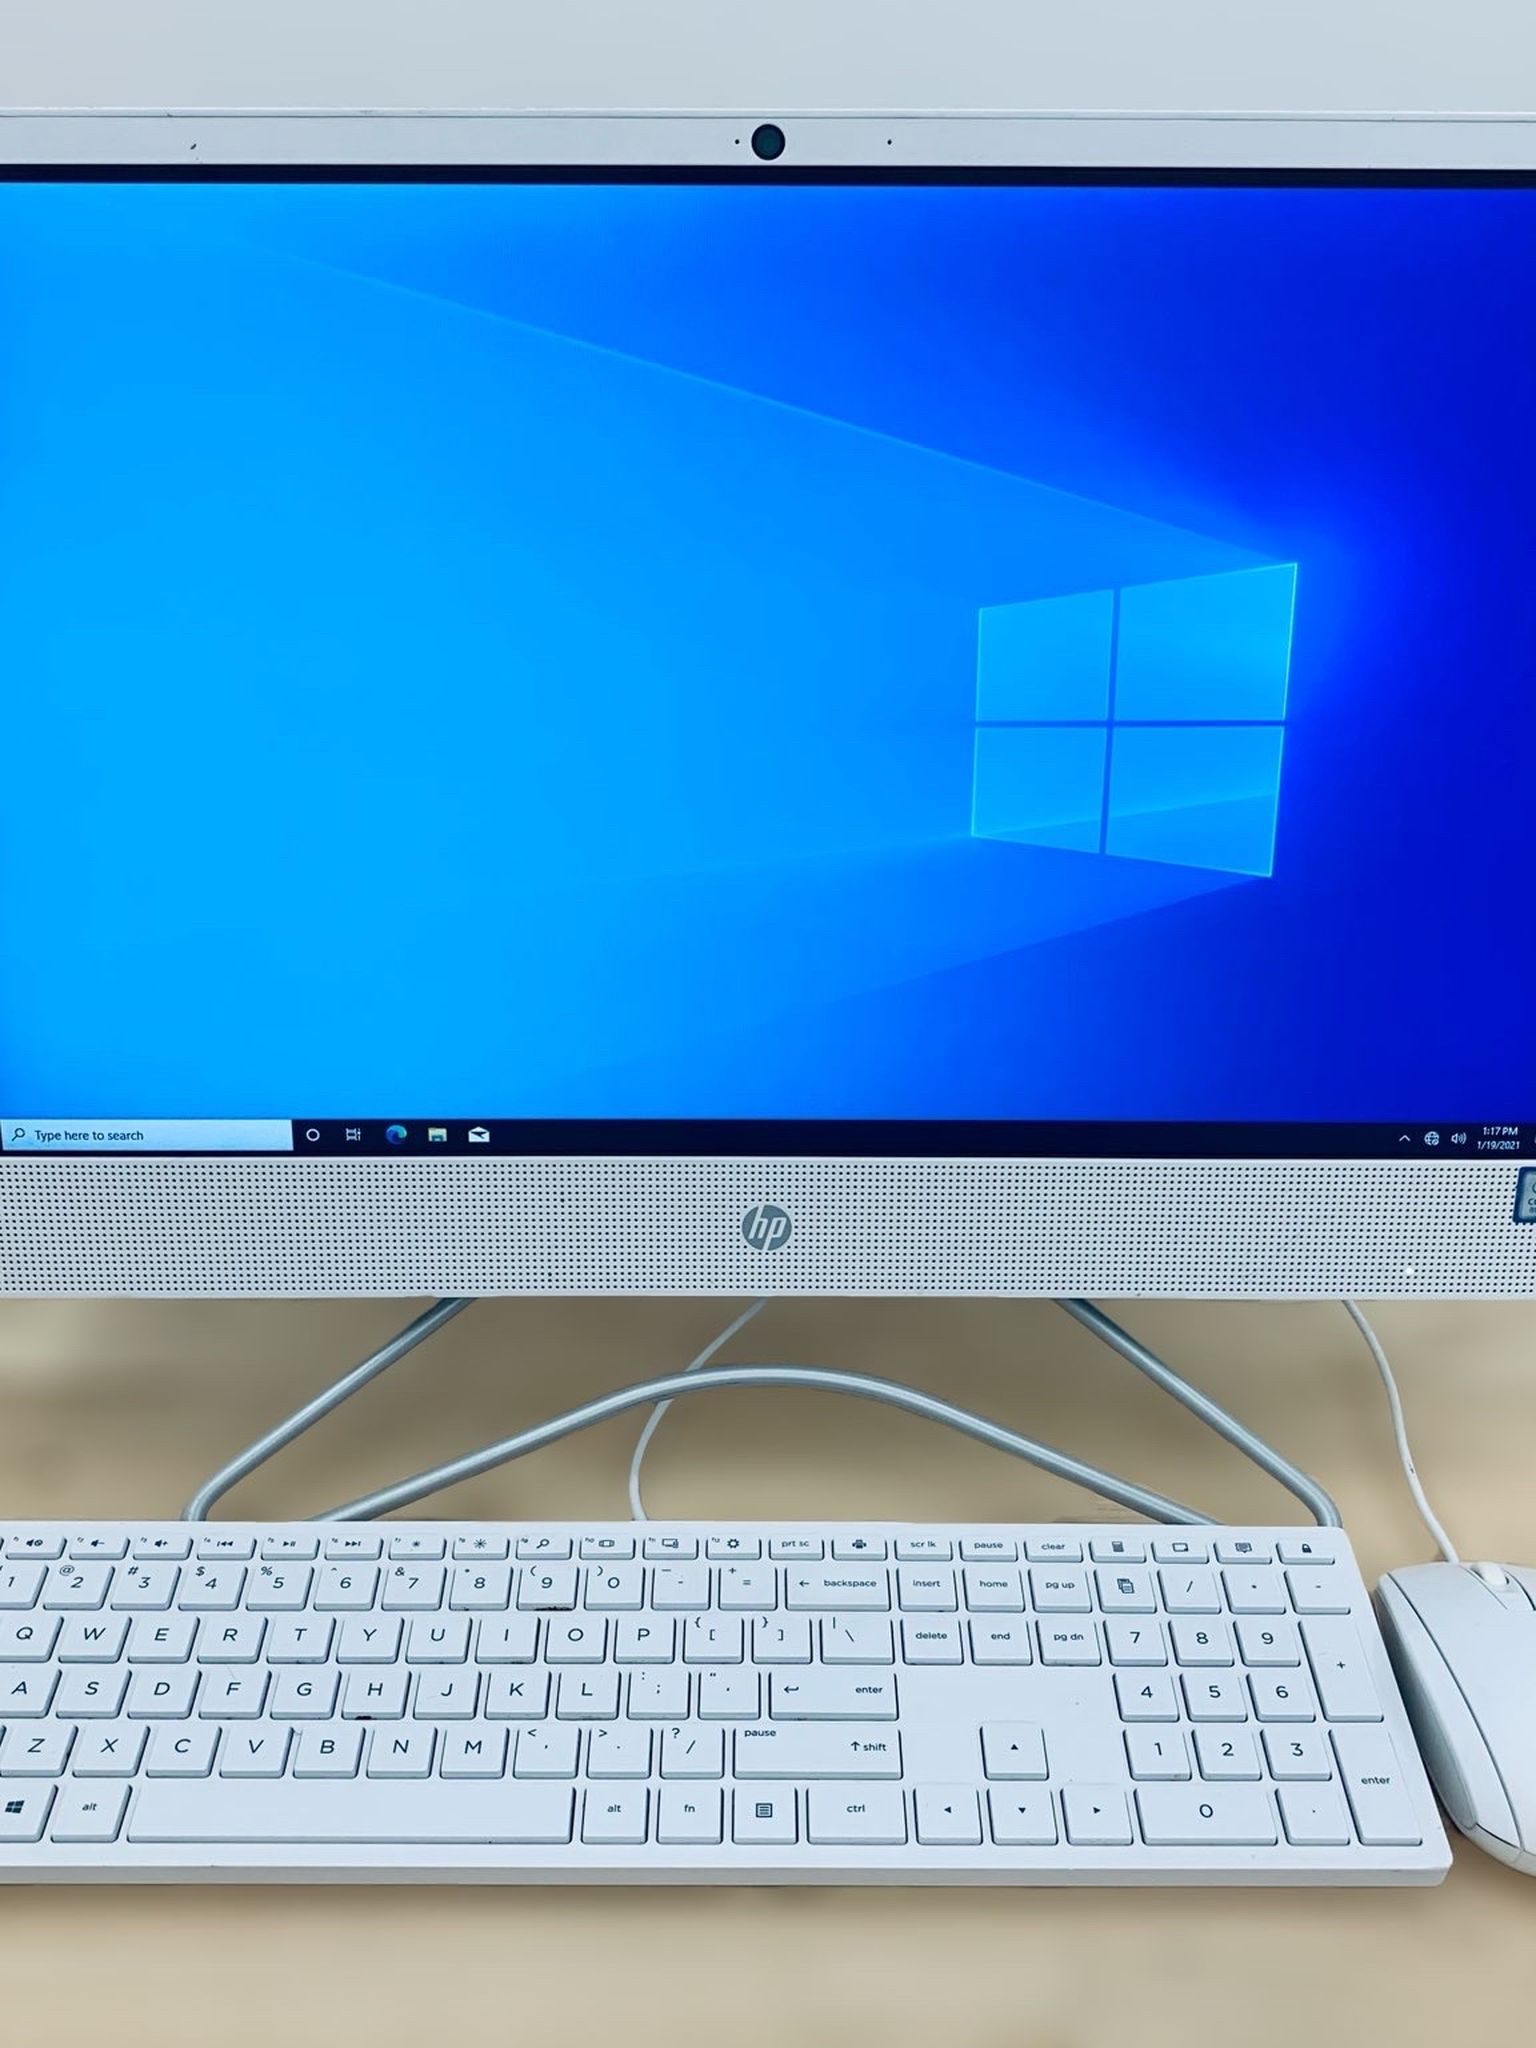 HP 22” All-in-one Full HD touchscreen PC desktop / Windows 10 / WiFi / Antivirus / CD-DVD / Camera / Bluetooth / Keyboard & mouse